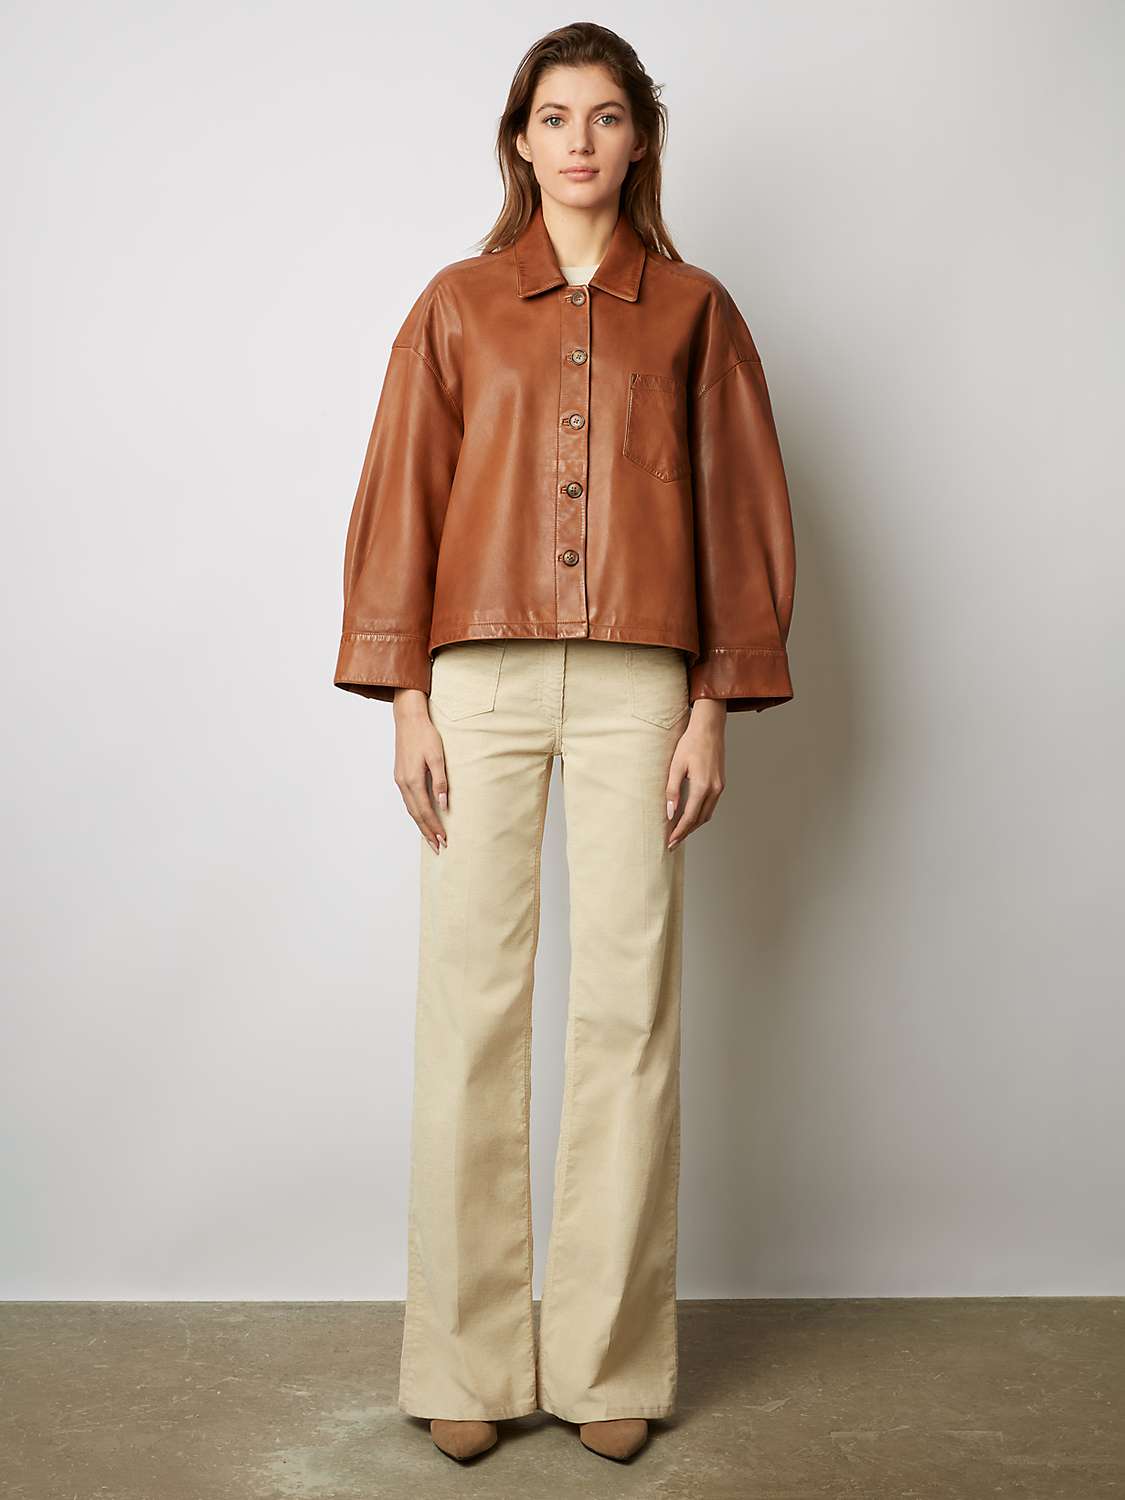 Buy Gerard Darel Jocya Leather Jacket, Brown Online at johnlewis.com